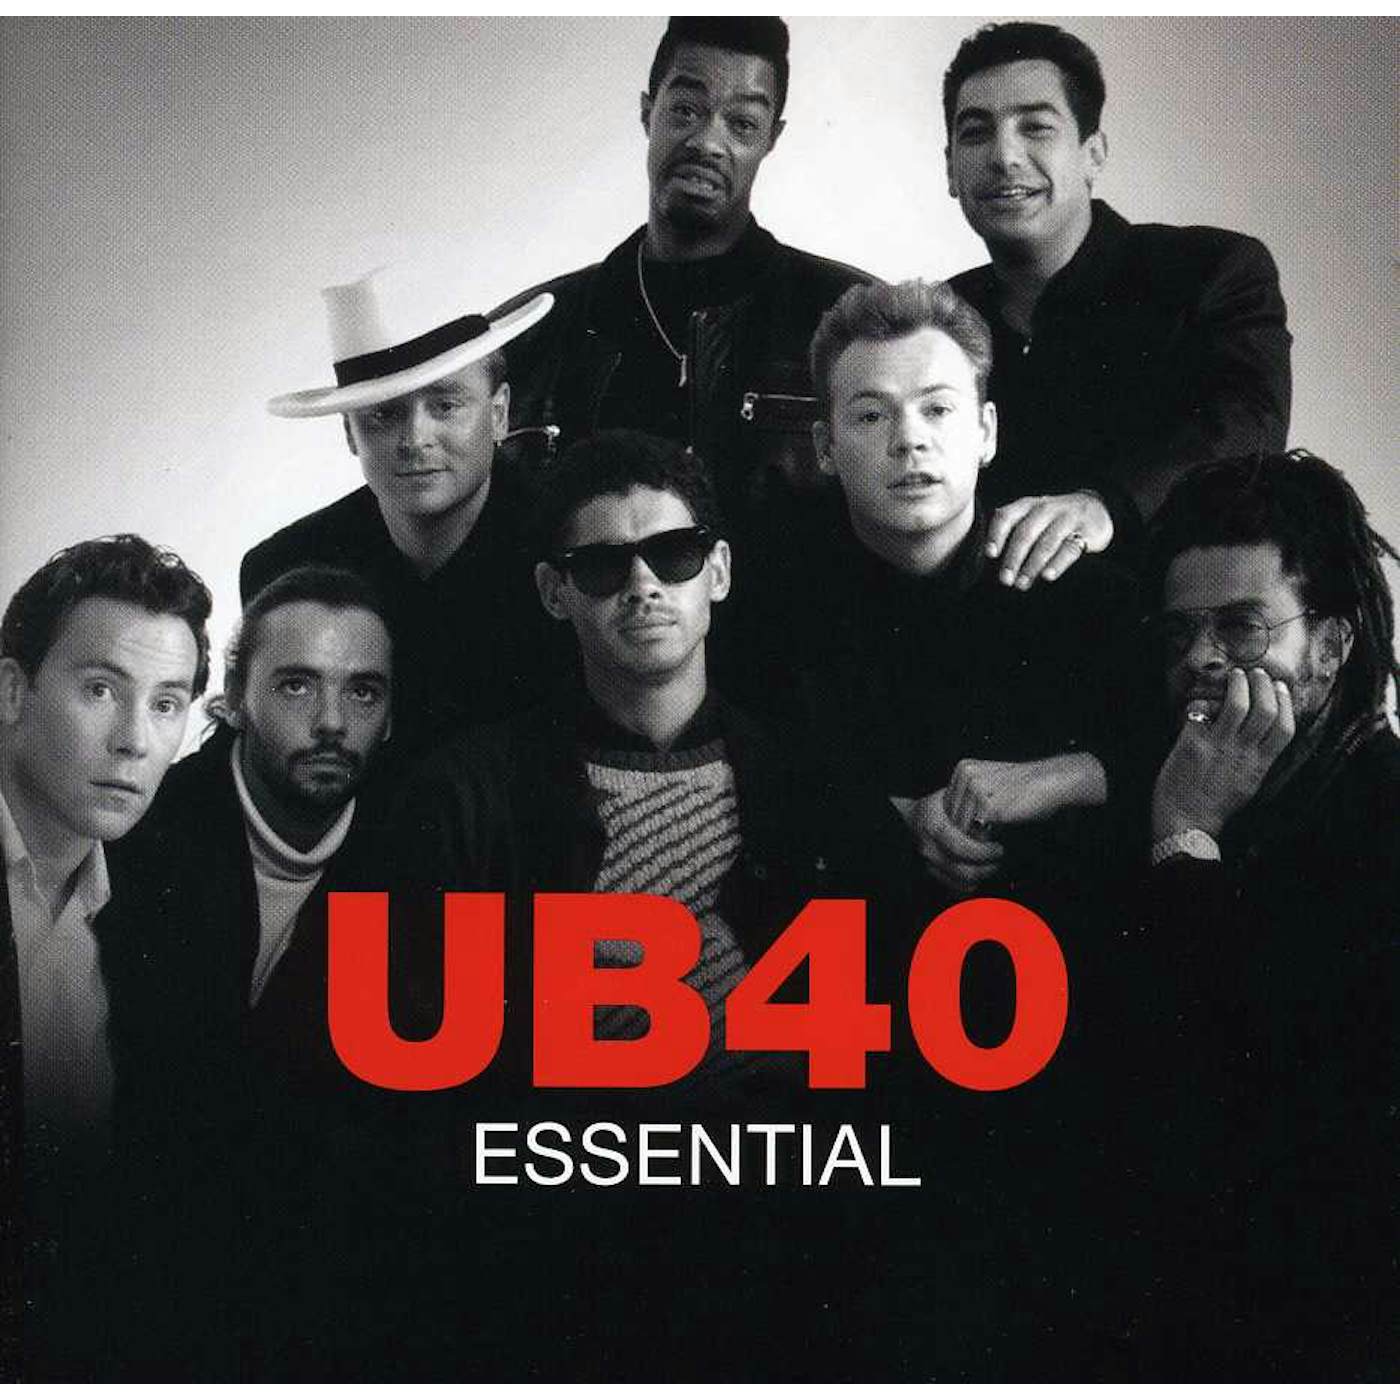 UB40 ESSENTIAL CD